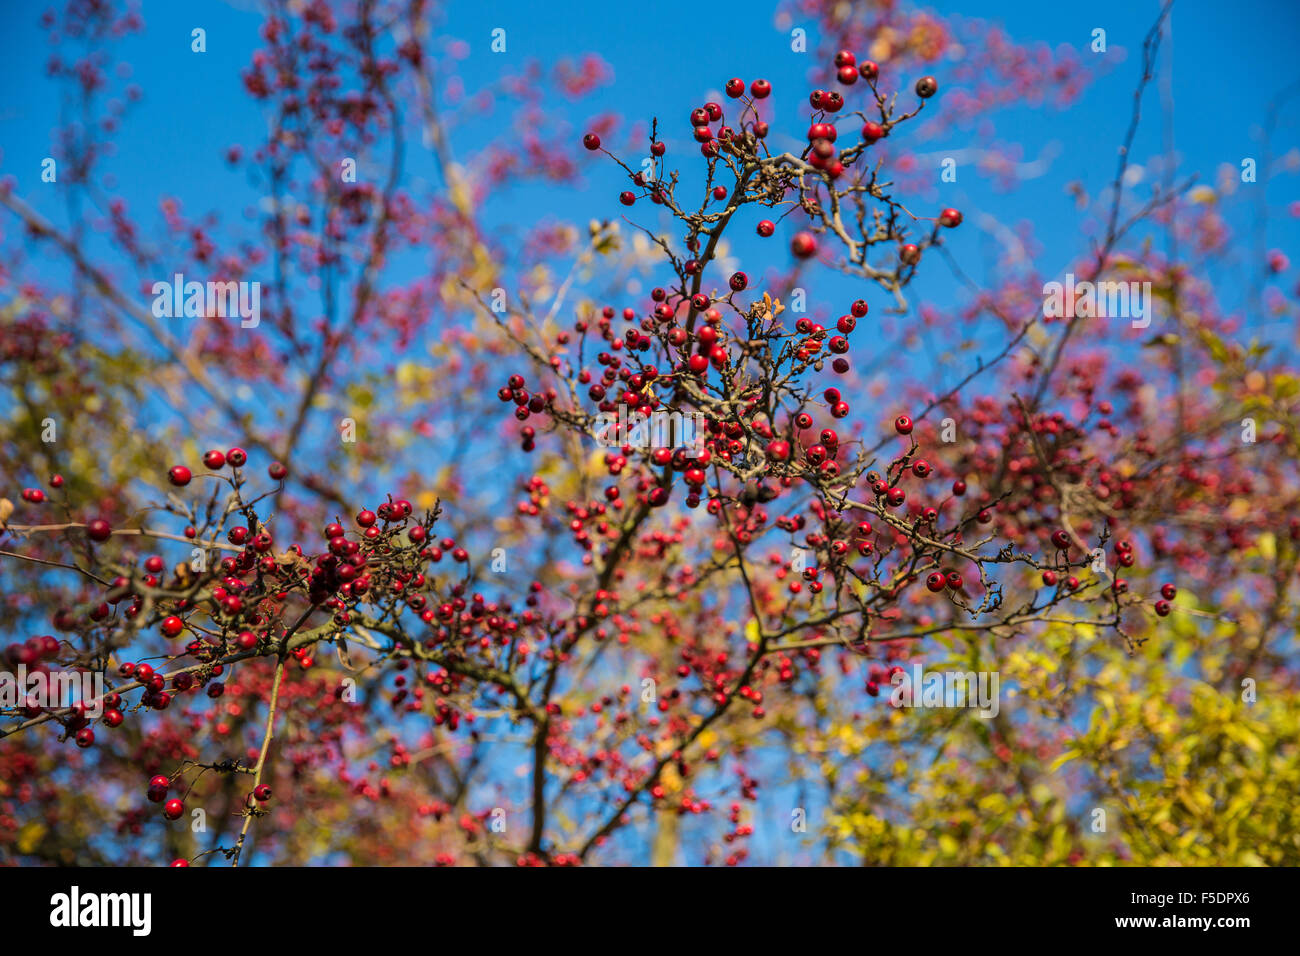 Red hawthorn berries in the wild (Crataegus oxyacantha L.) Stock Photo